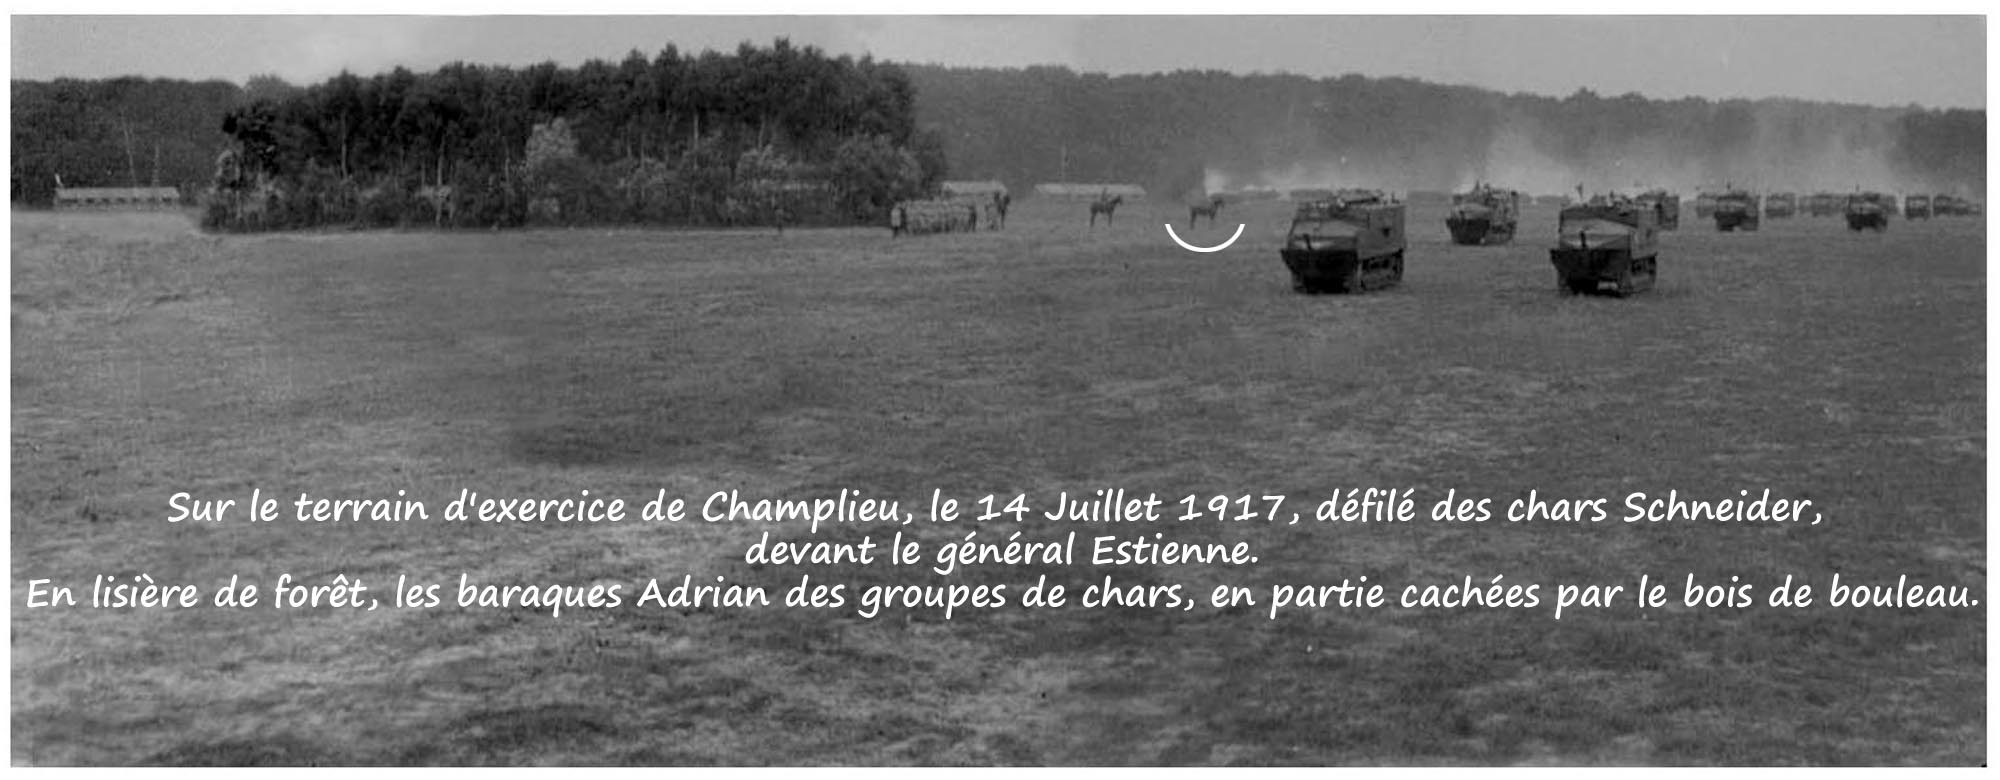 05 - Bois de bouleau de Champlieu (01a).jpg